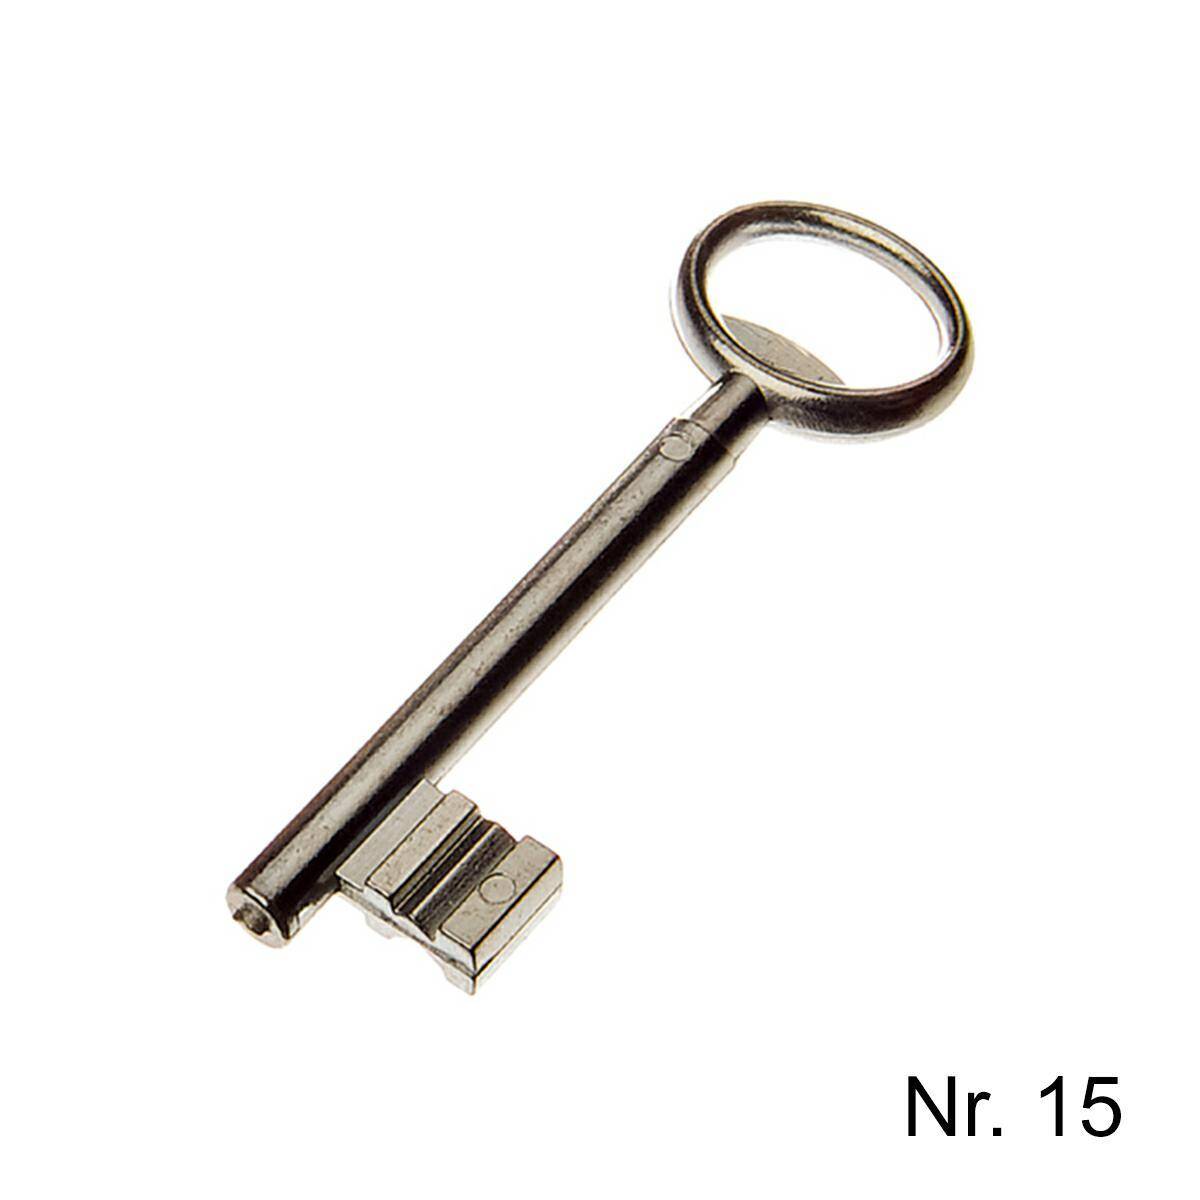 Cast key Jania for the lock - No. 15